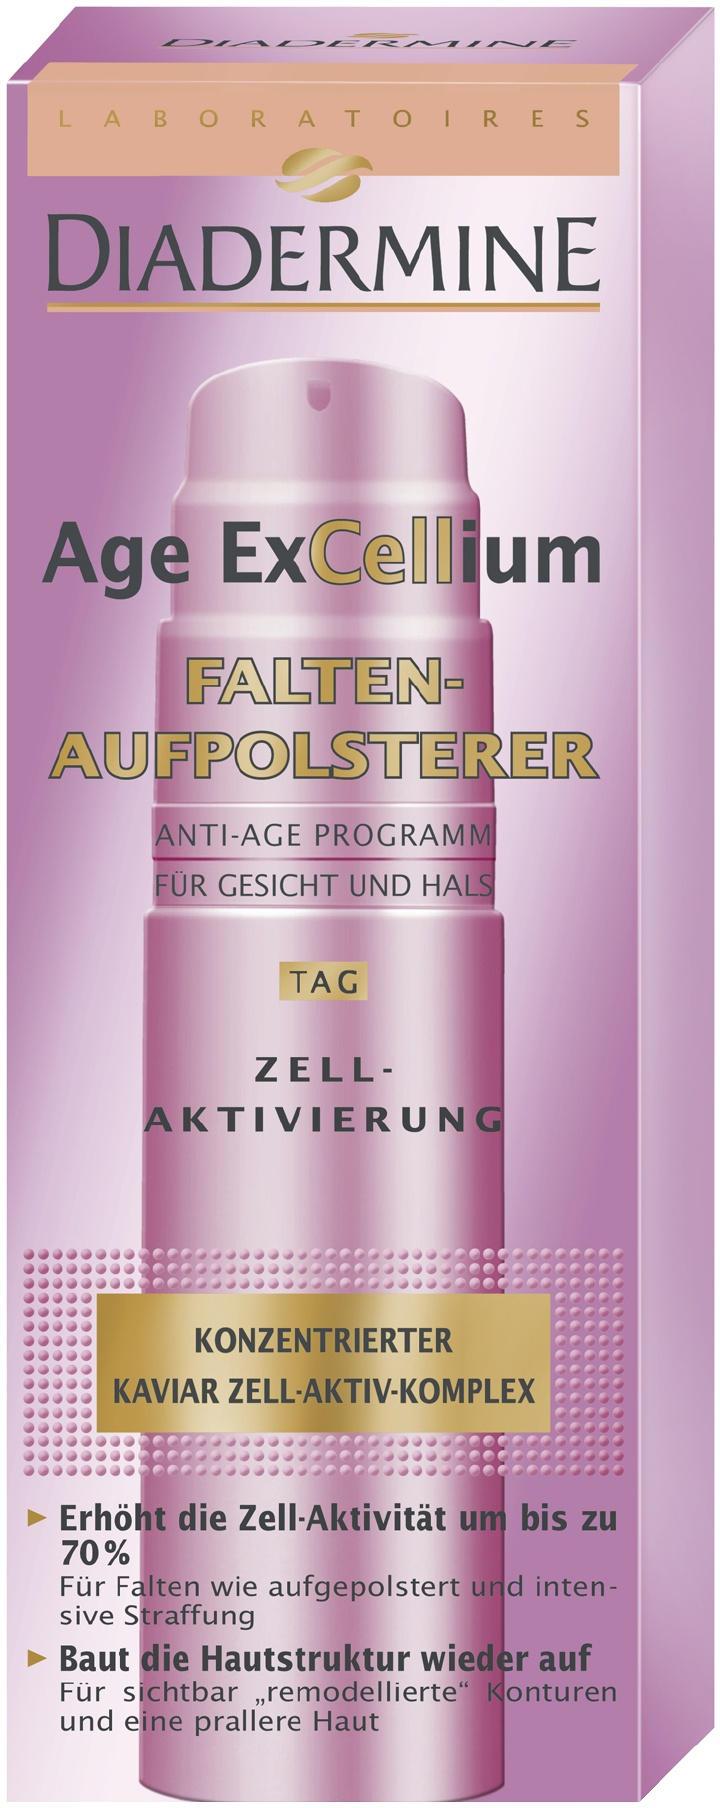 Diadermine Age ExCellium Contourist anti-age Dagcreme 50 ml